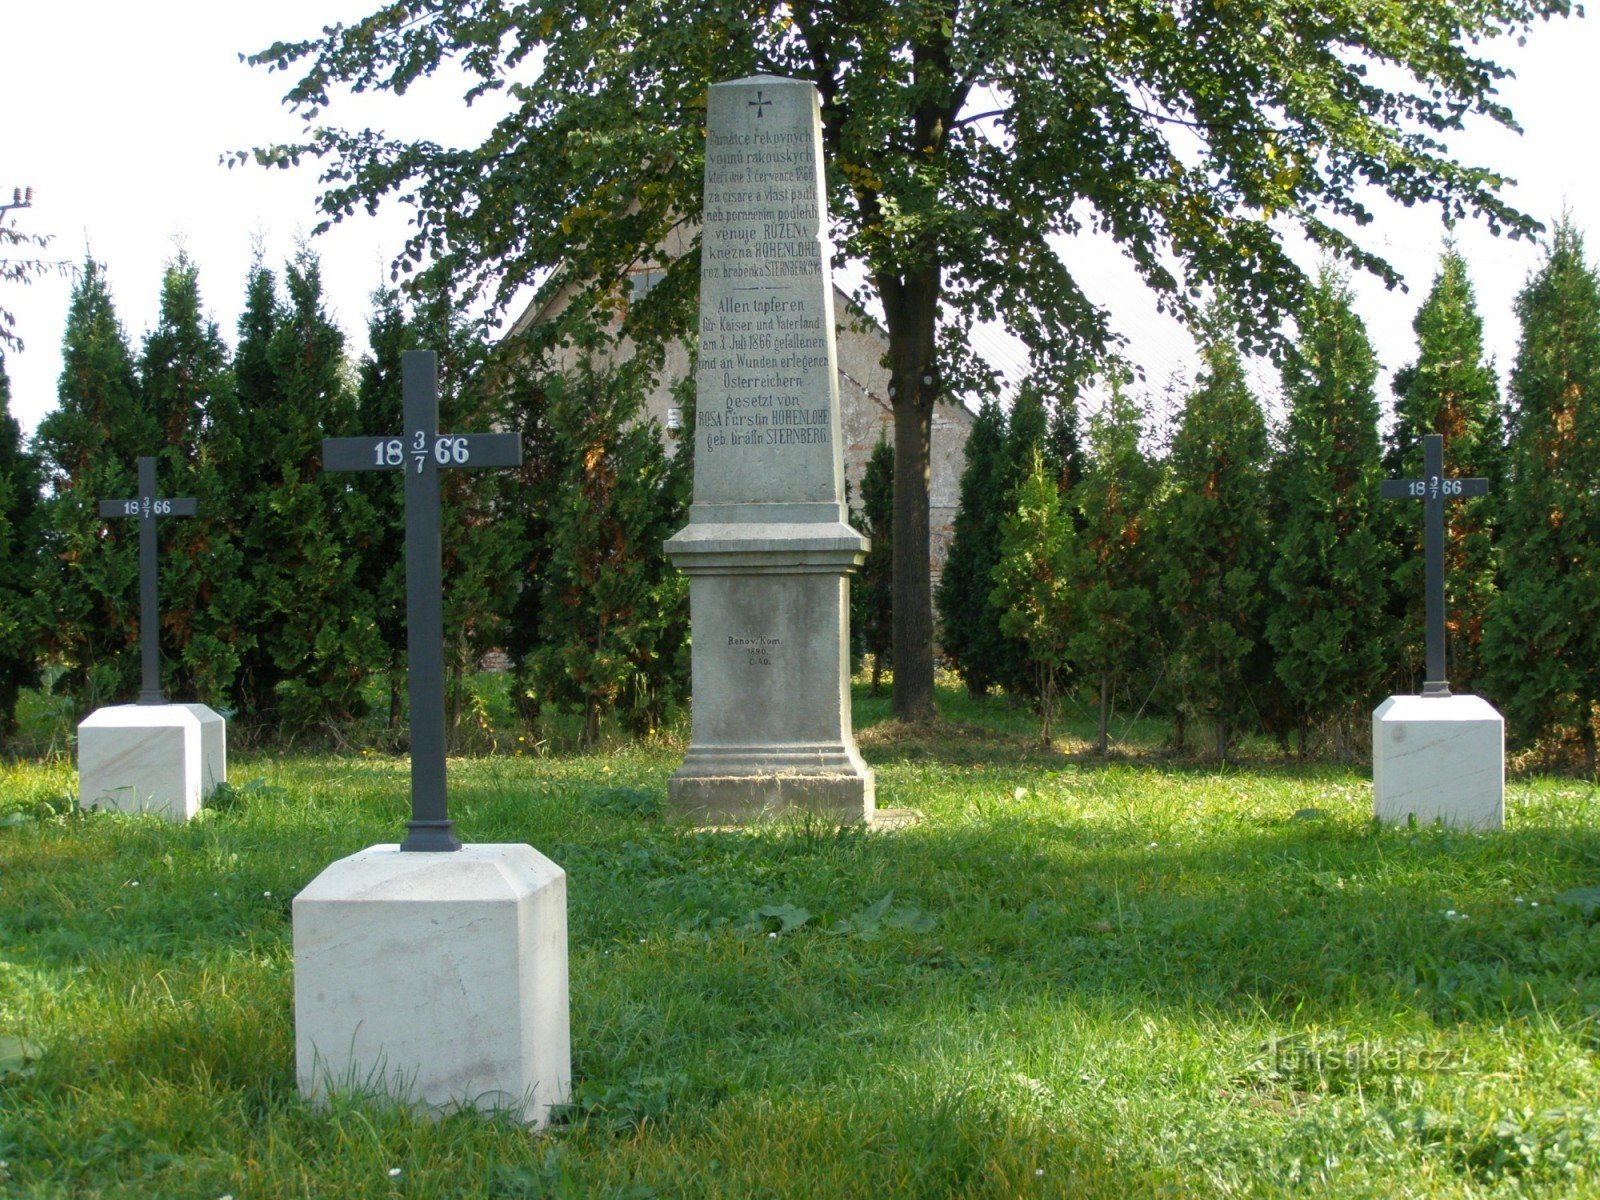 Nedelíště - military cemetery of the battle in 1866